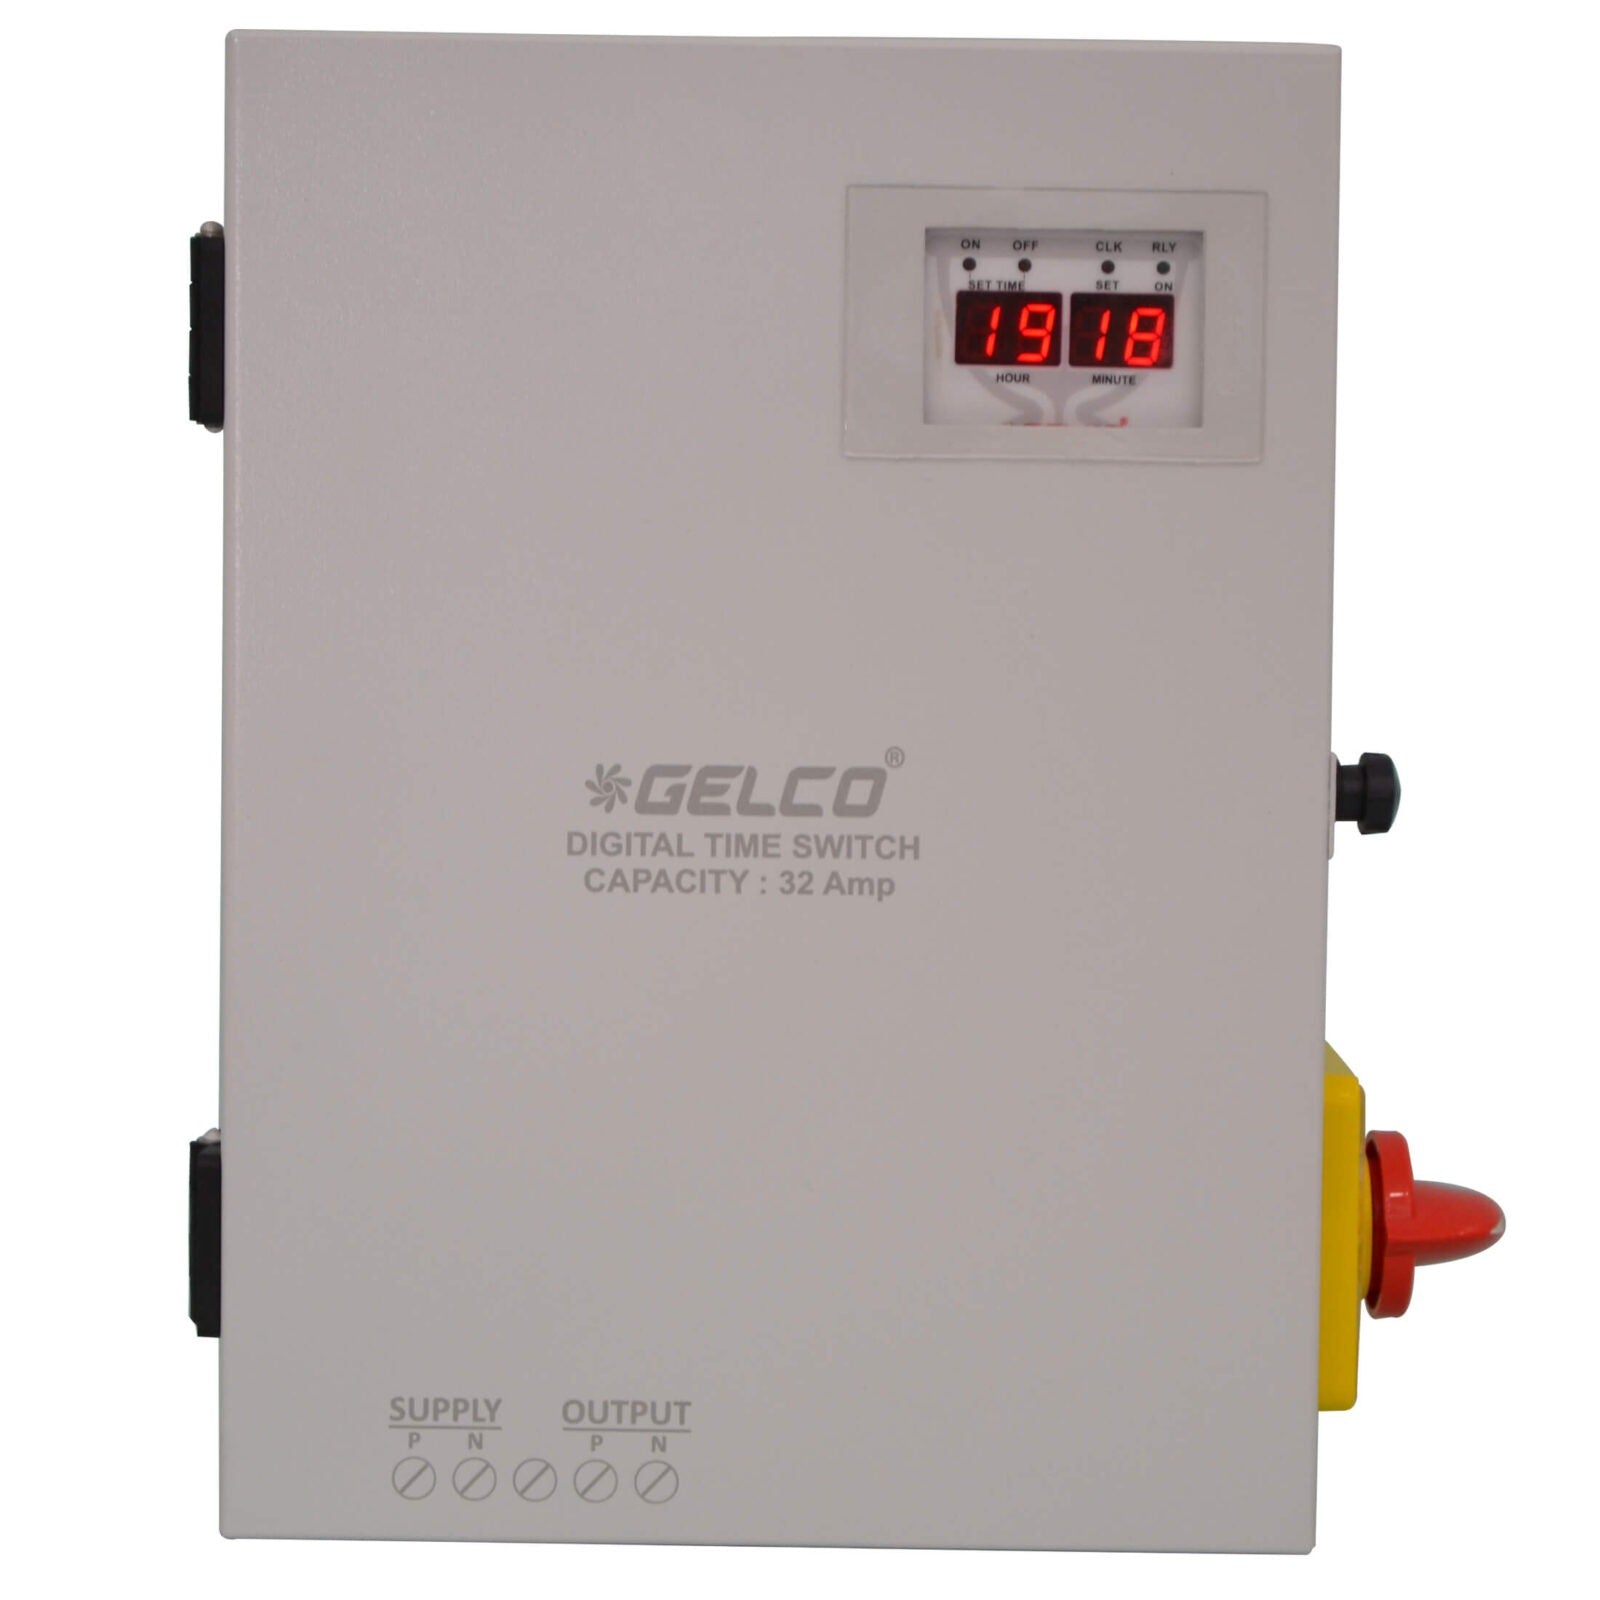 Digital Time Switch Panel - Gelco Electronics Pvt. Ltd.